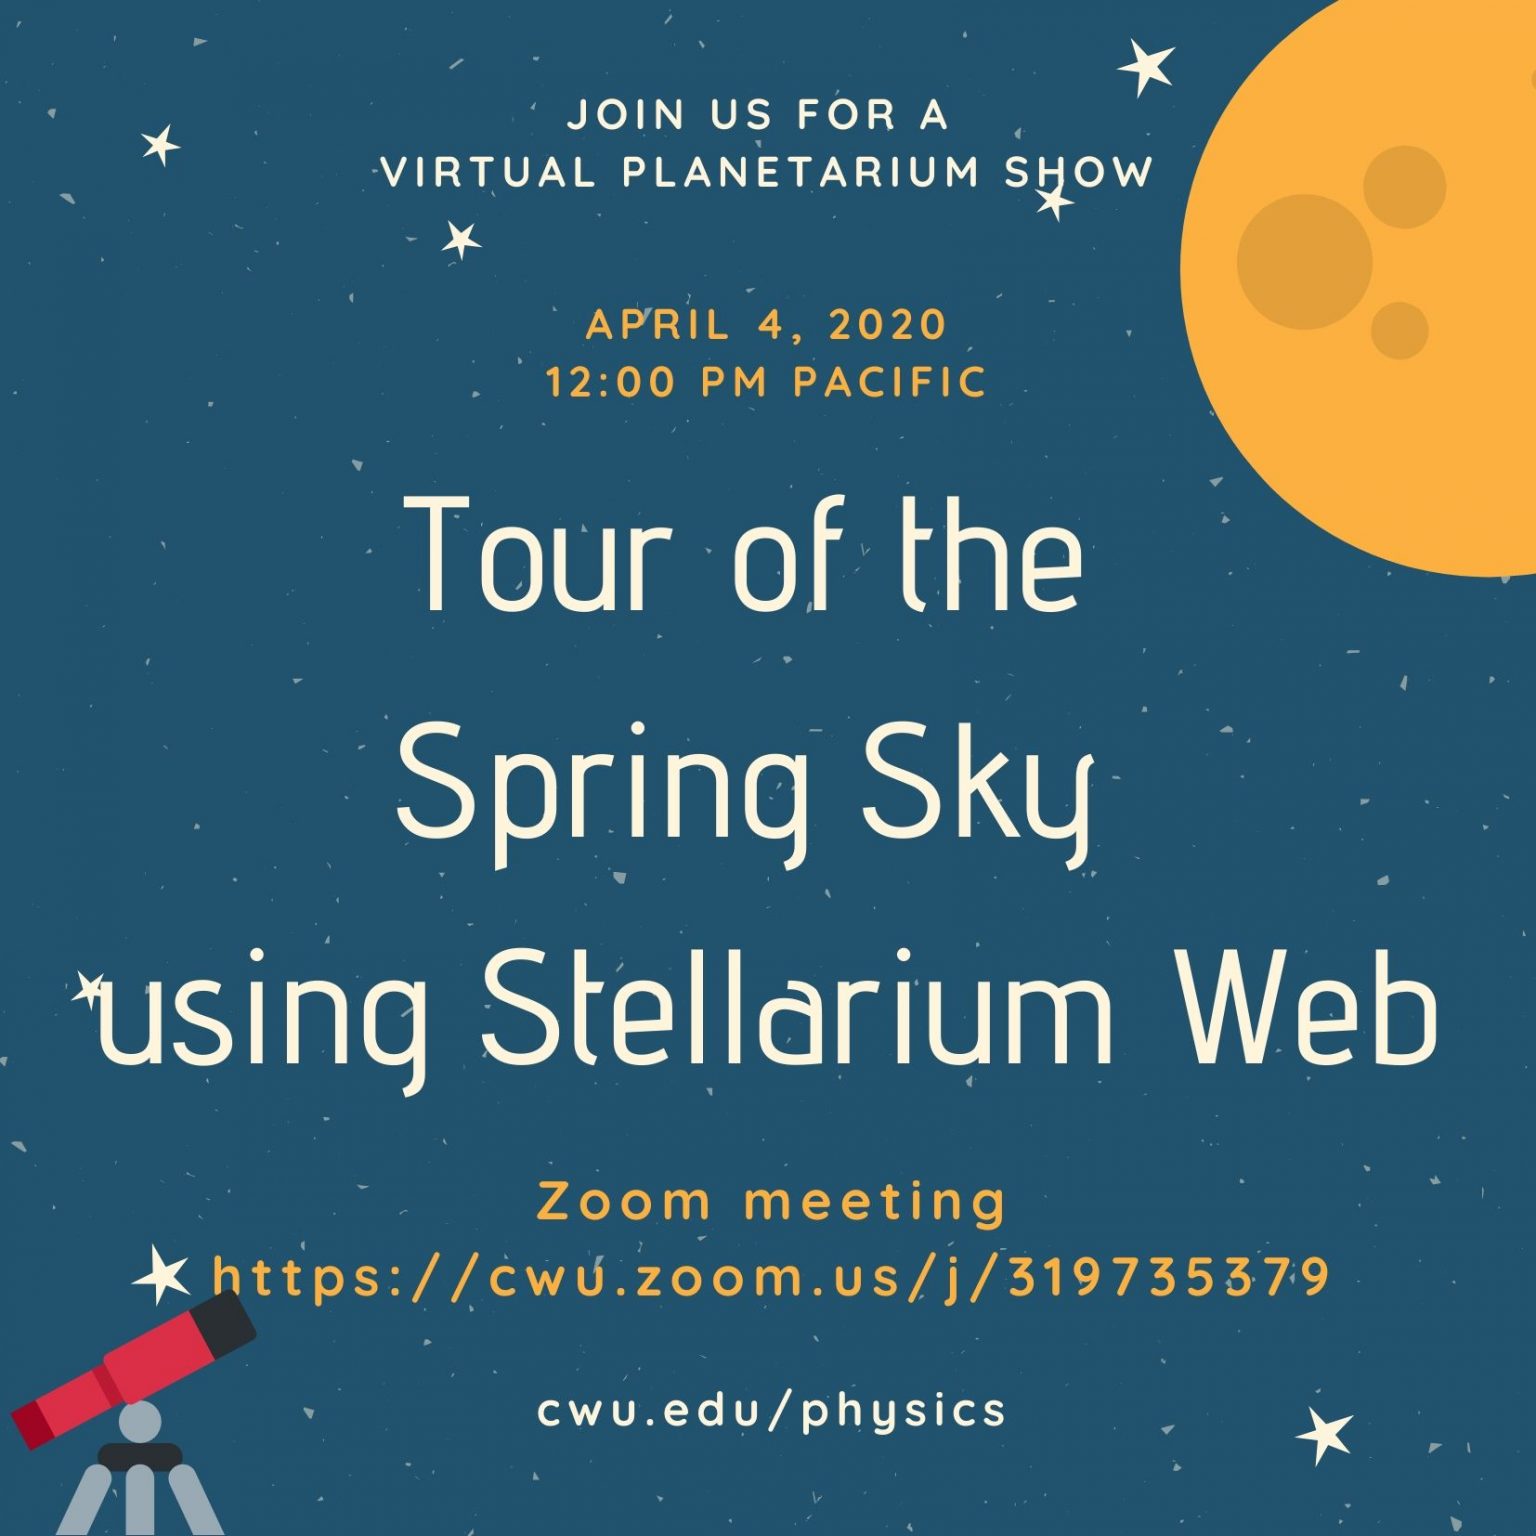 stellarium web